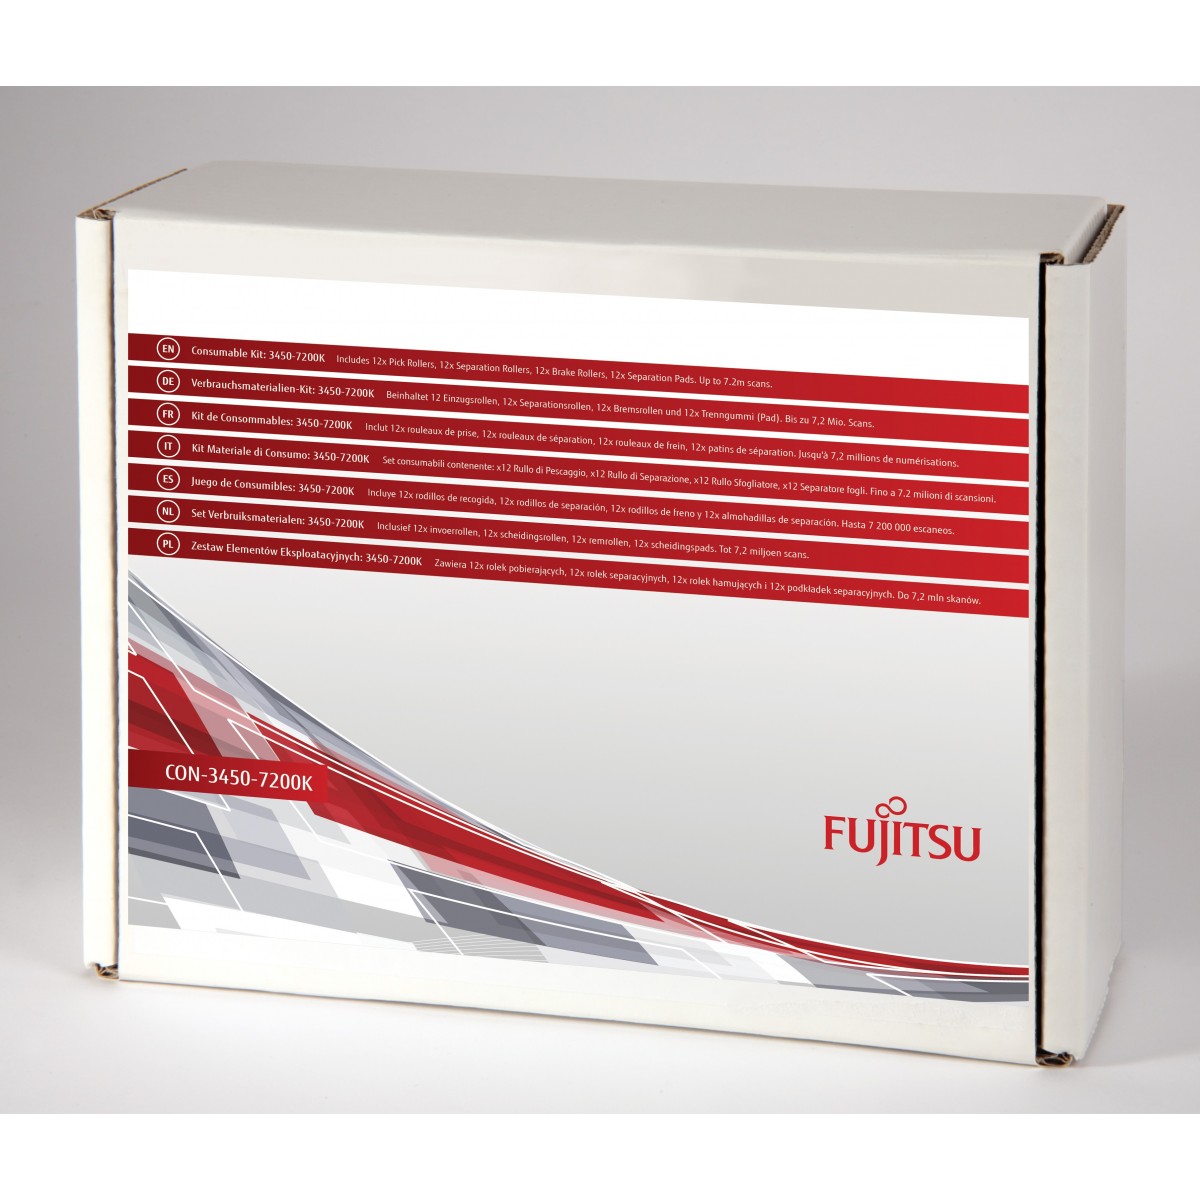 Fujitsu 3450-7200K - Consumable kit - Multicolor